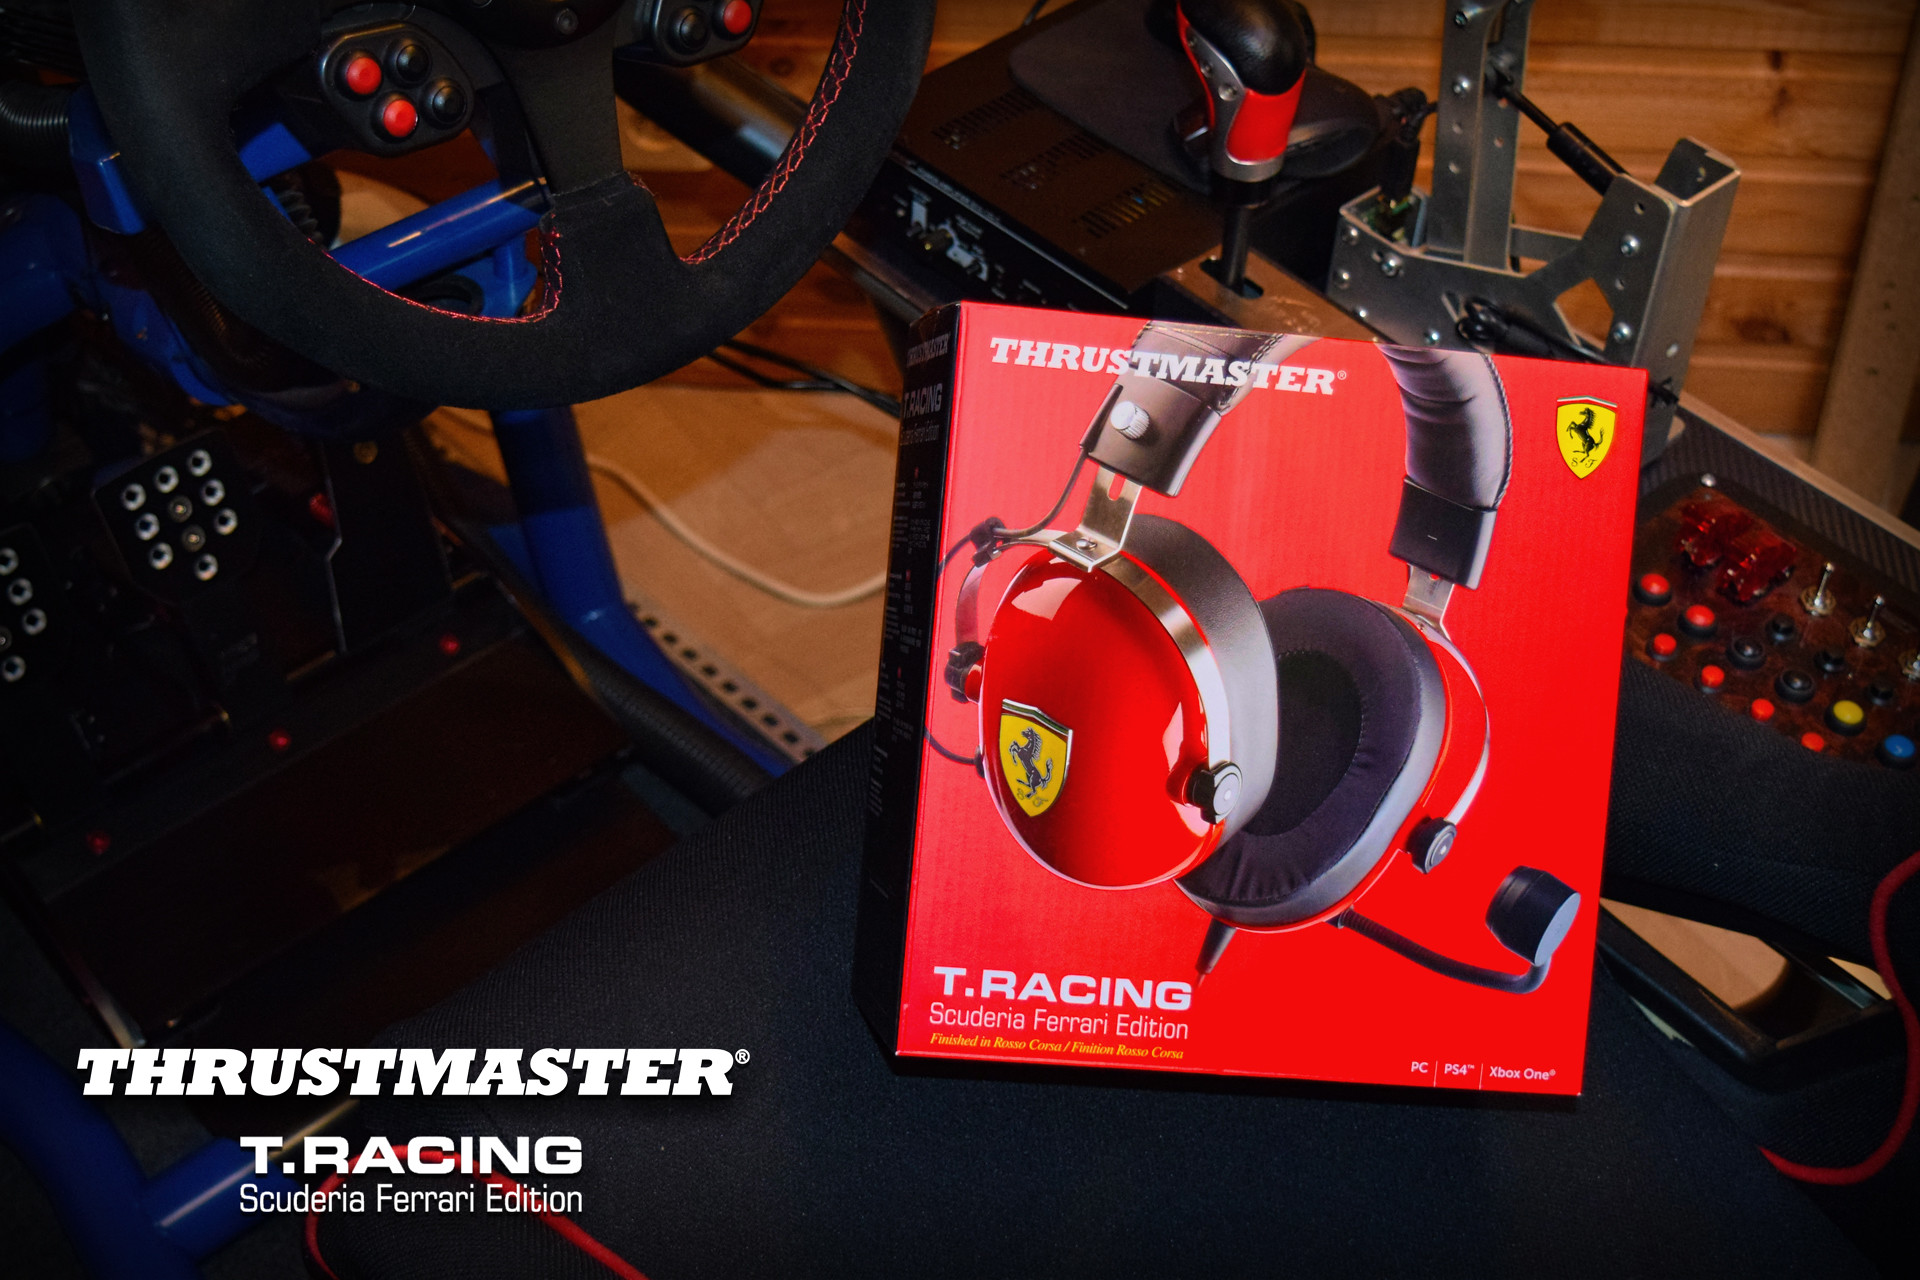 Thrustmaster T.Racing Scuderia Ferrari Edition Headset Review - Bsimracing